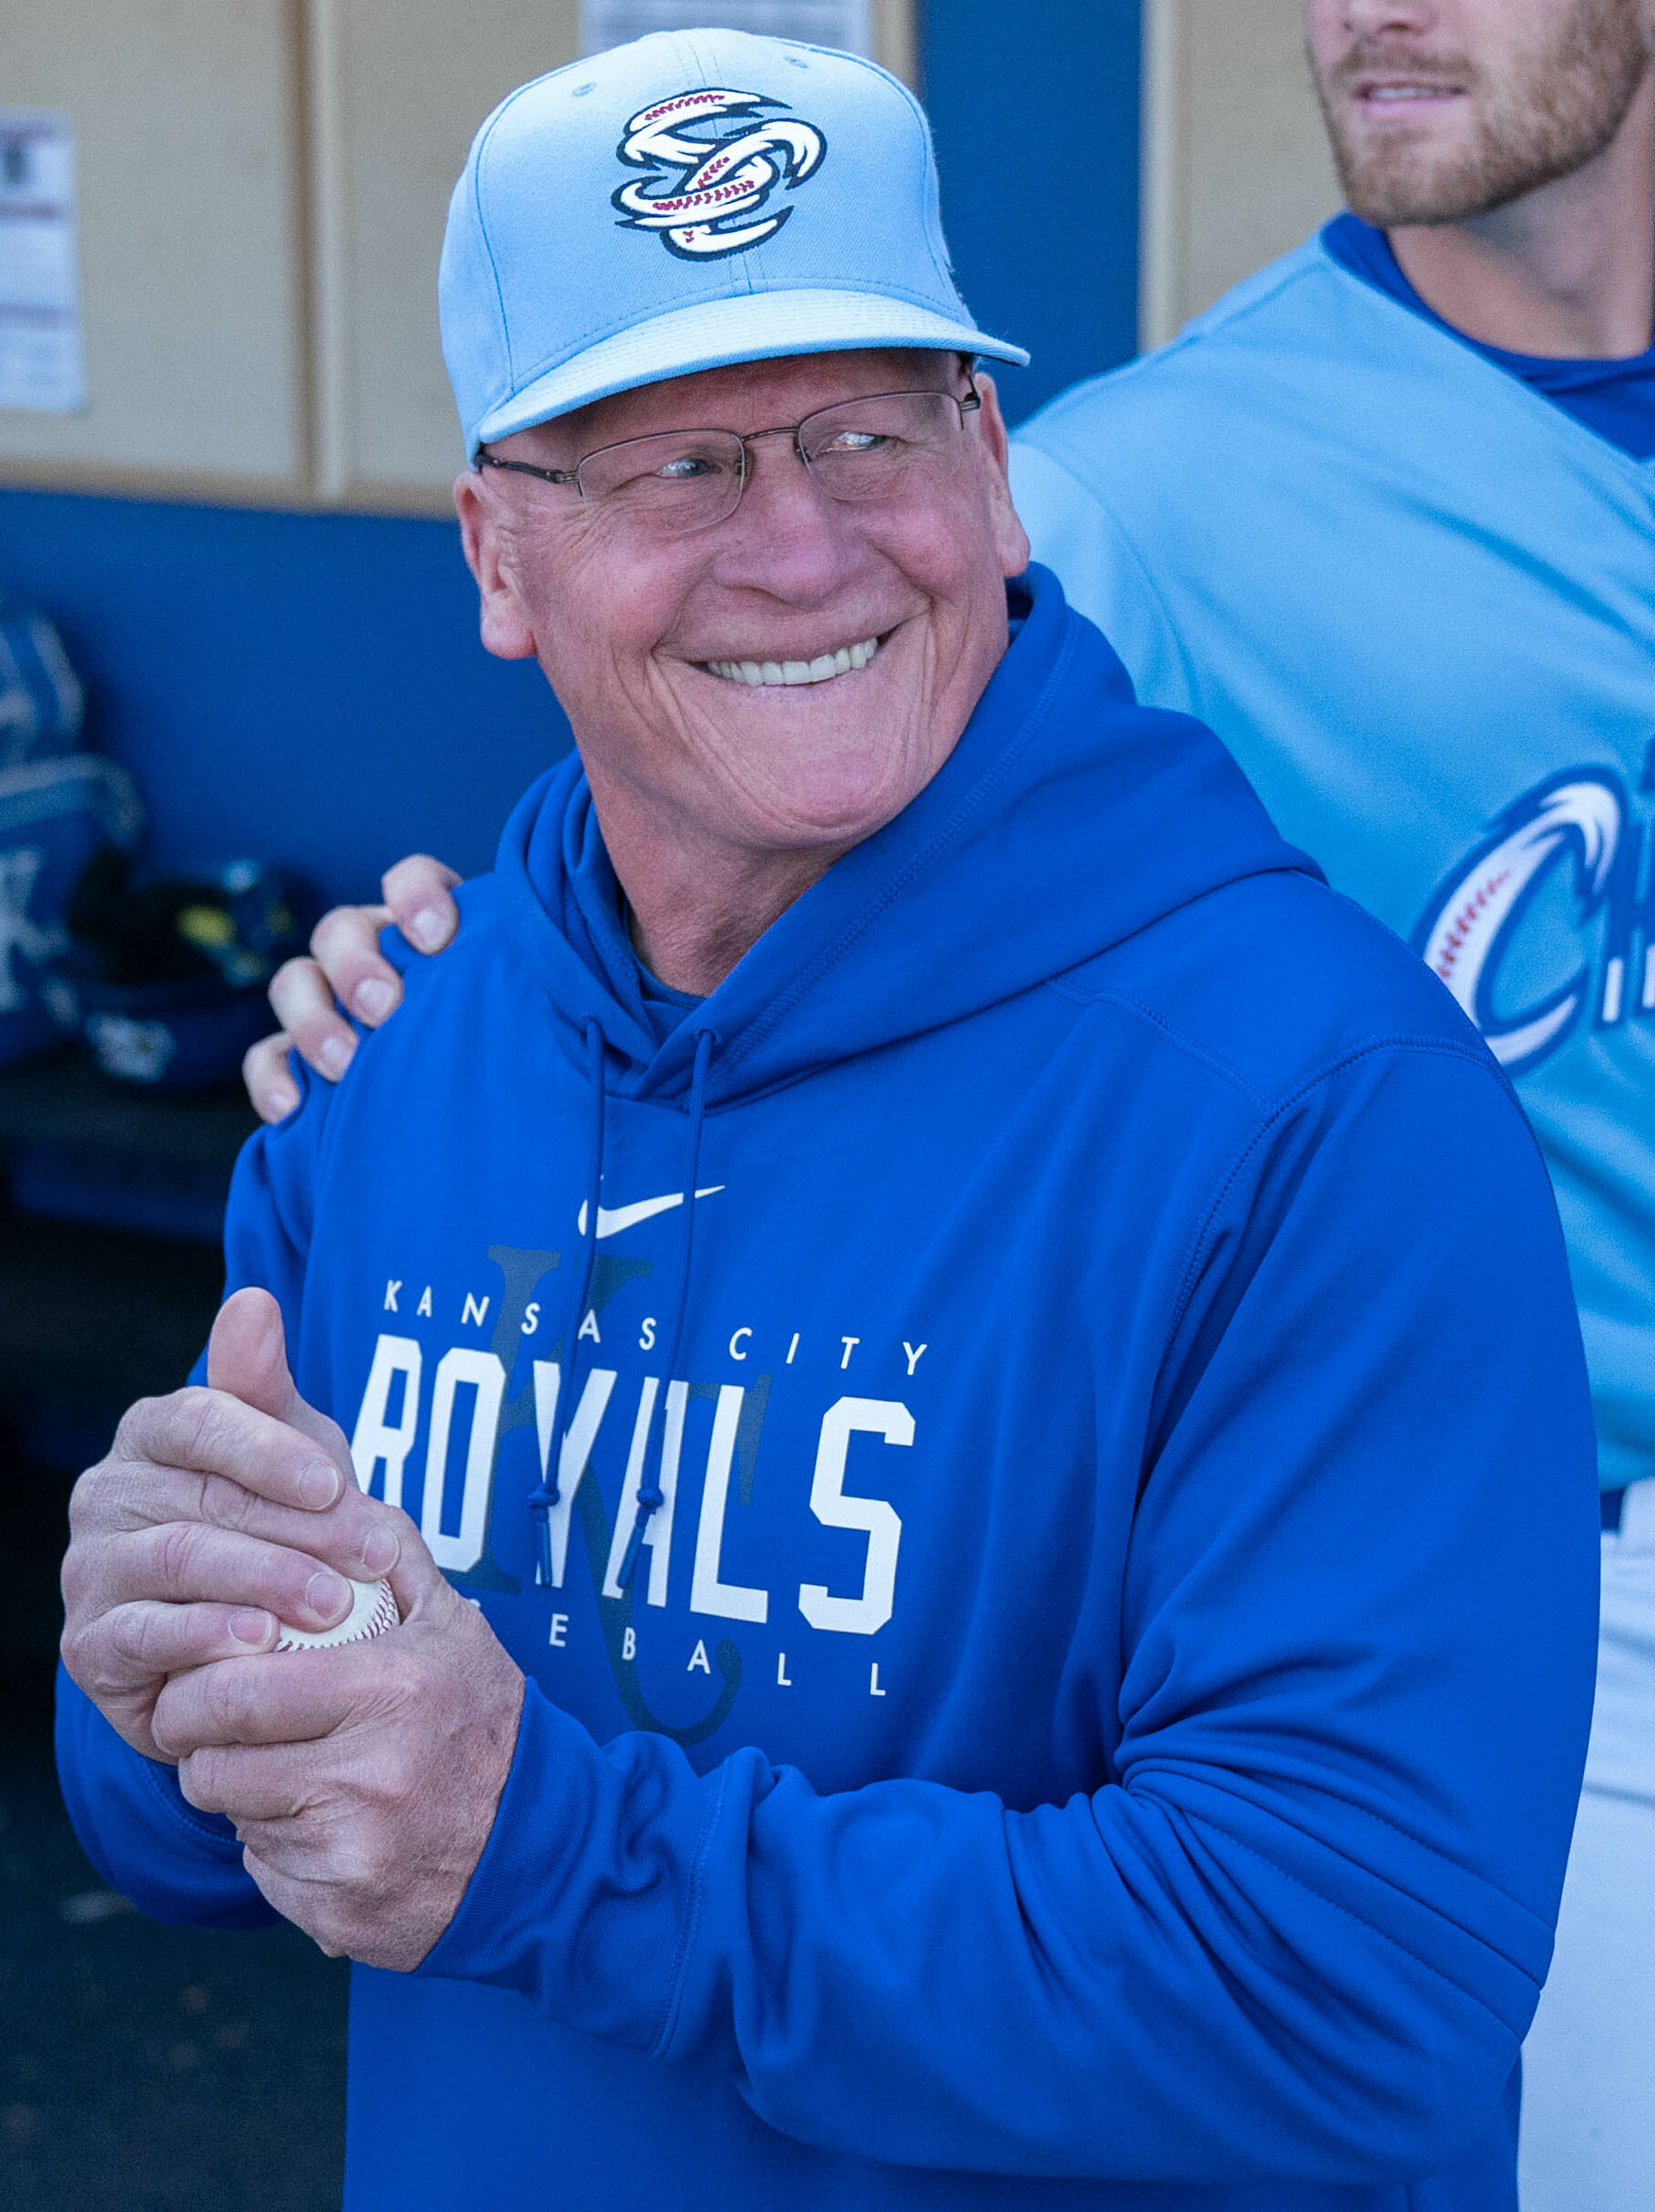 2015 Kansas City Royals season - Wikipedia